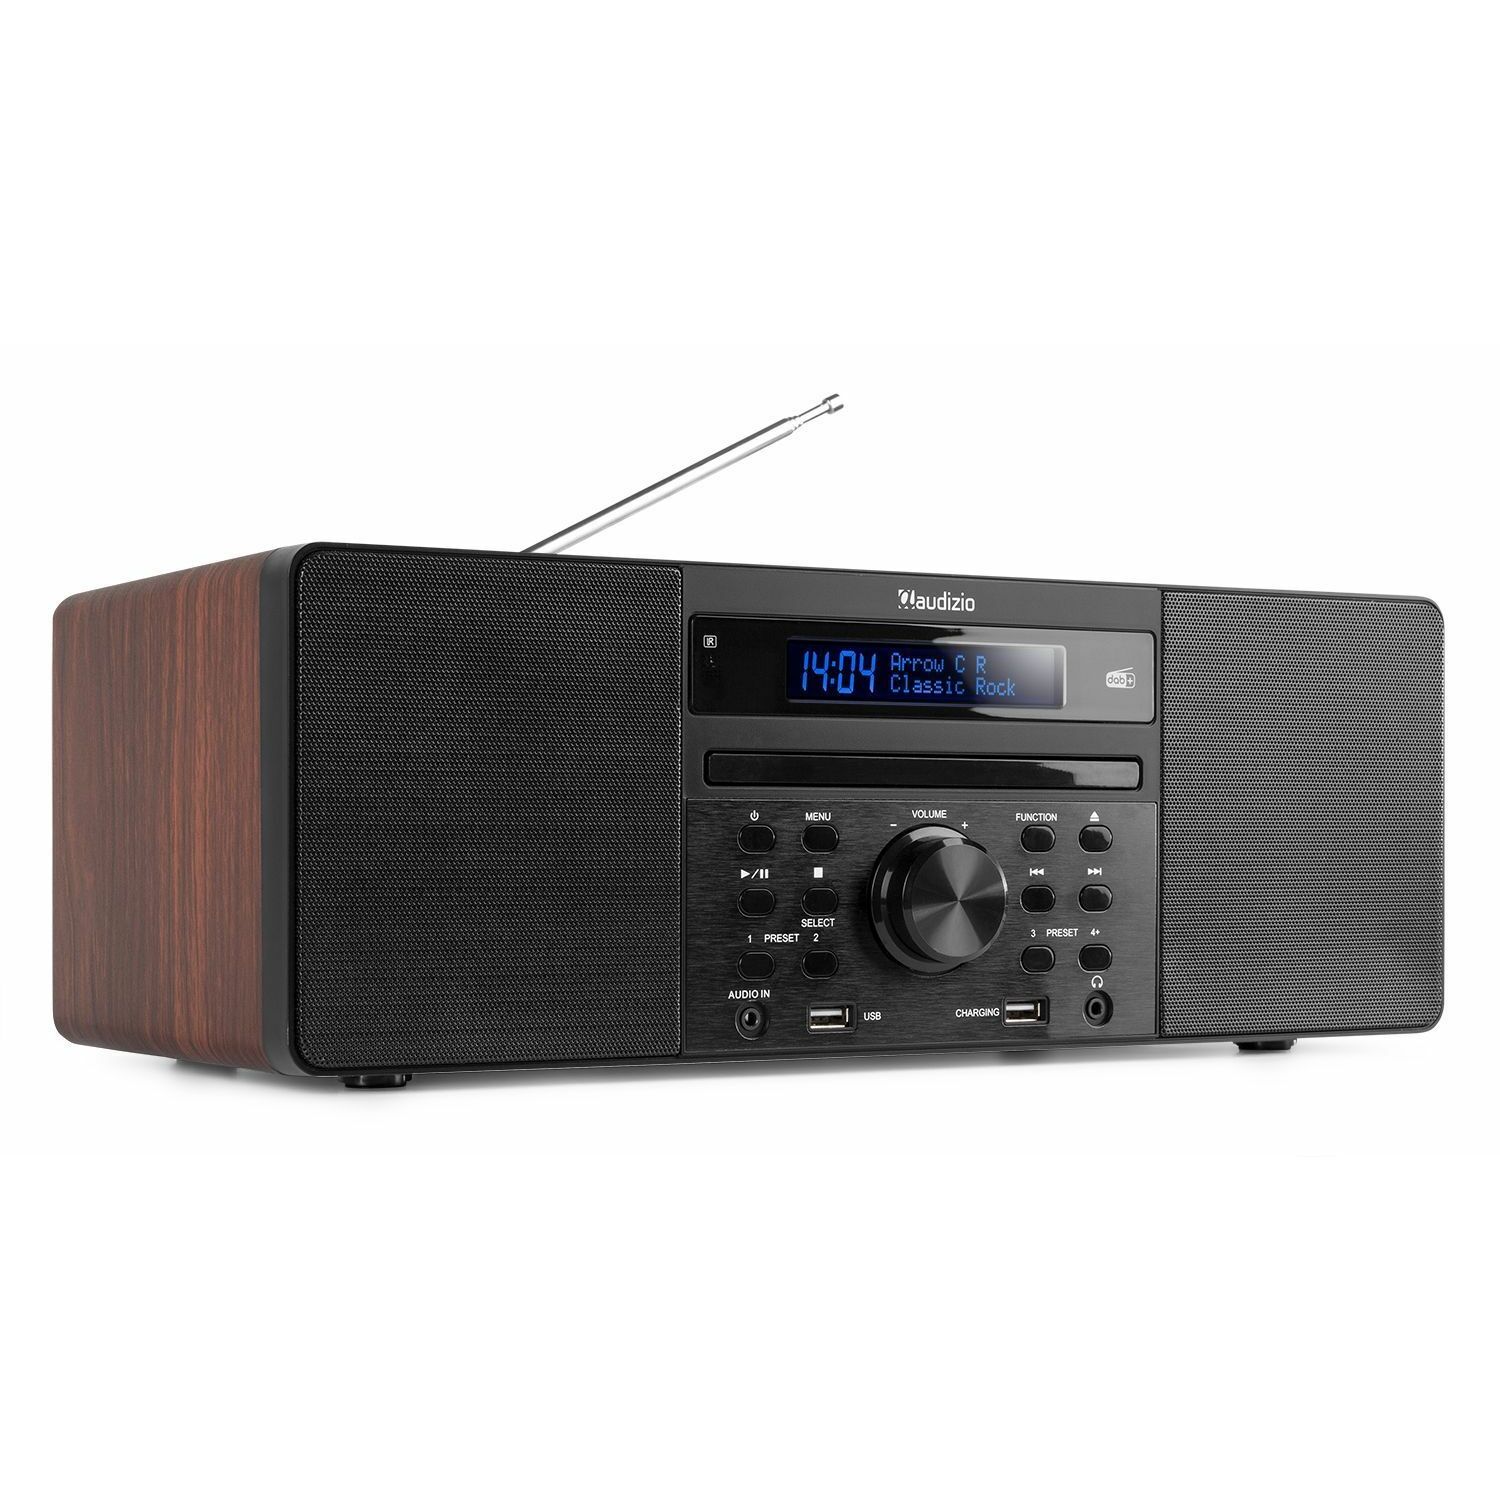 Audizio Prato microset met DAB radio, Bluetooth, mp3 & - Hout kopen?